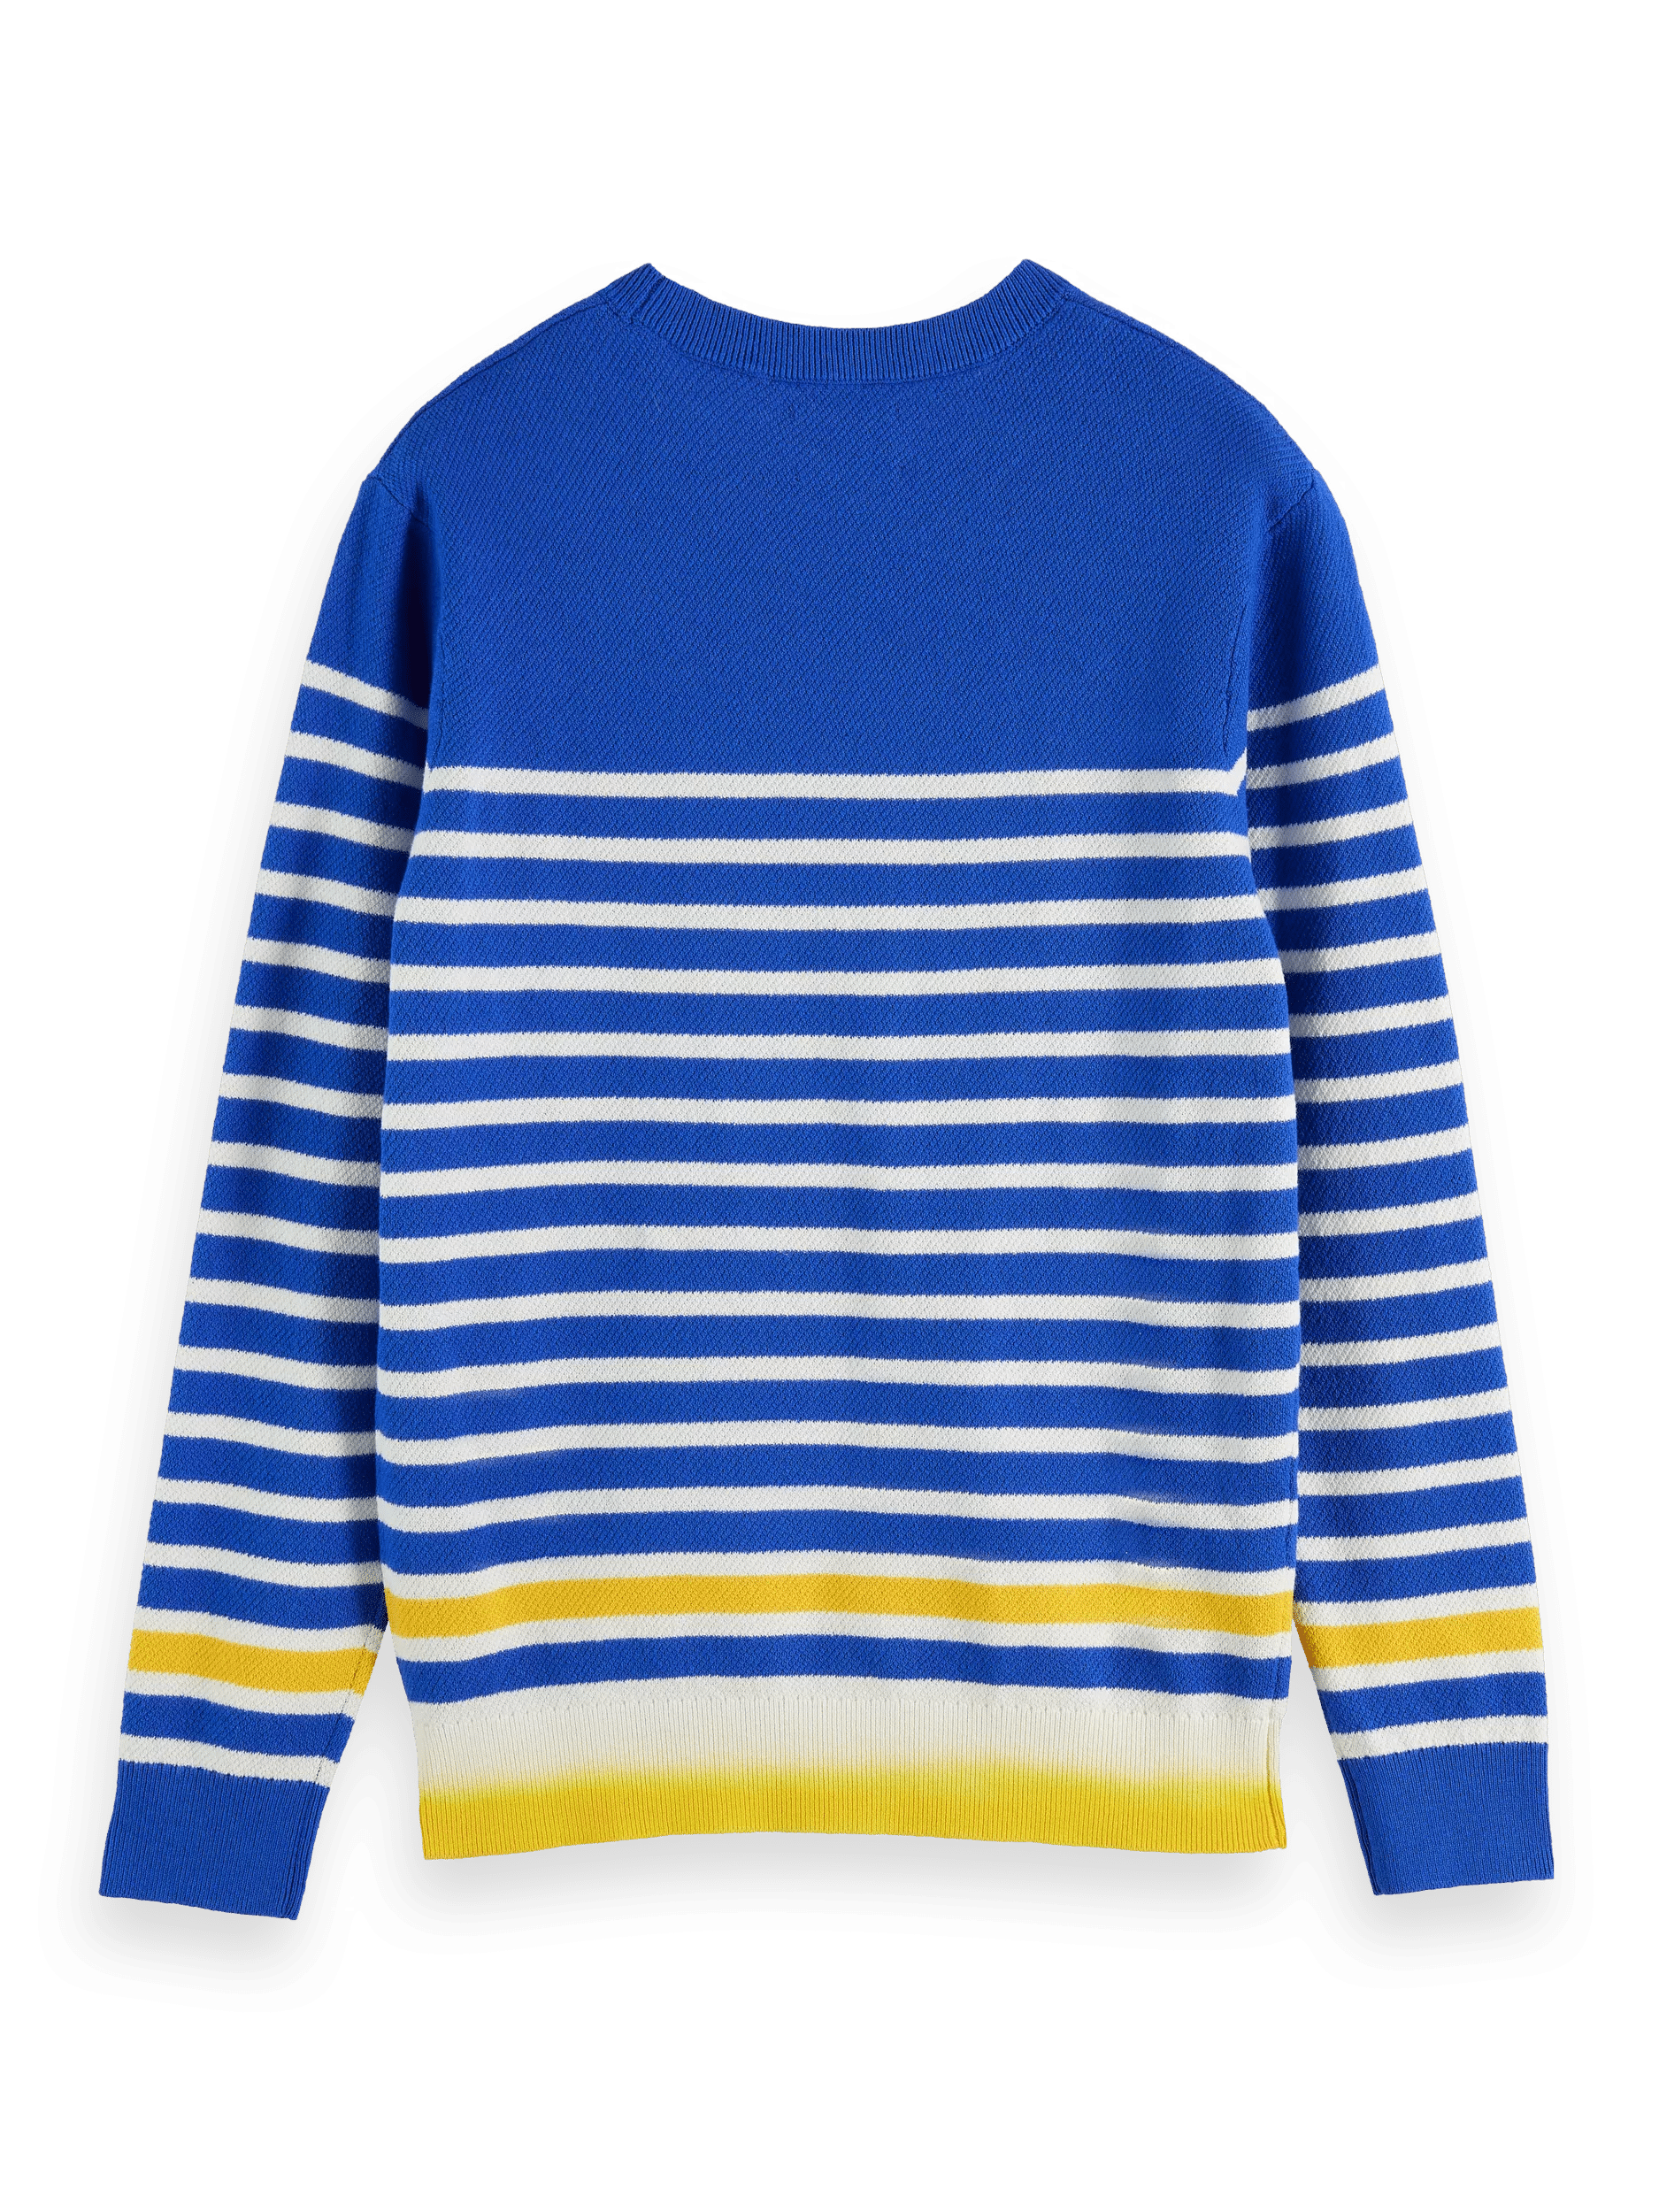 Scotch & Soda Breton striped pullover sweater BCK